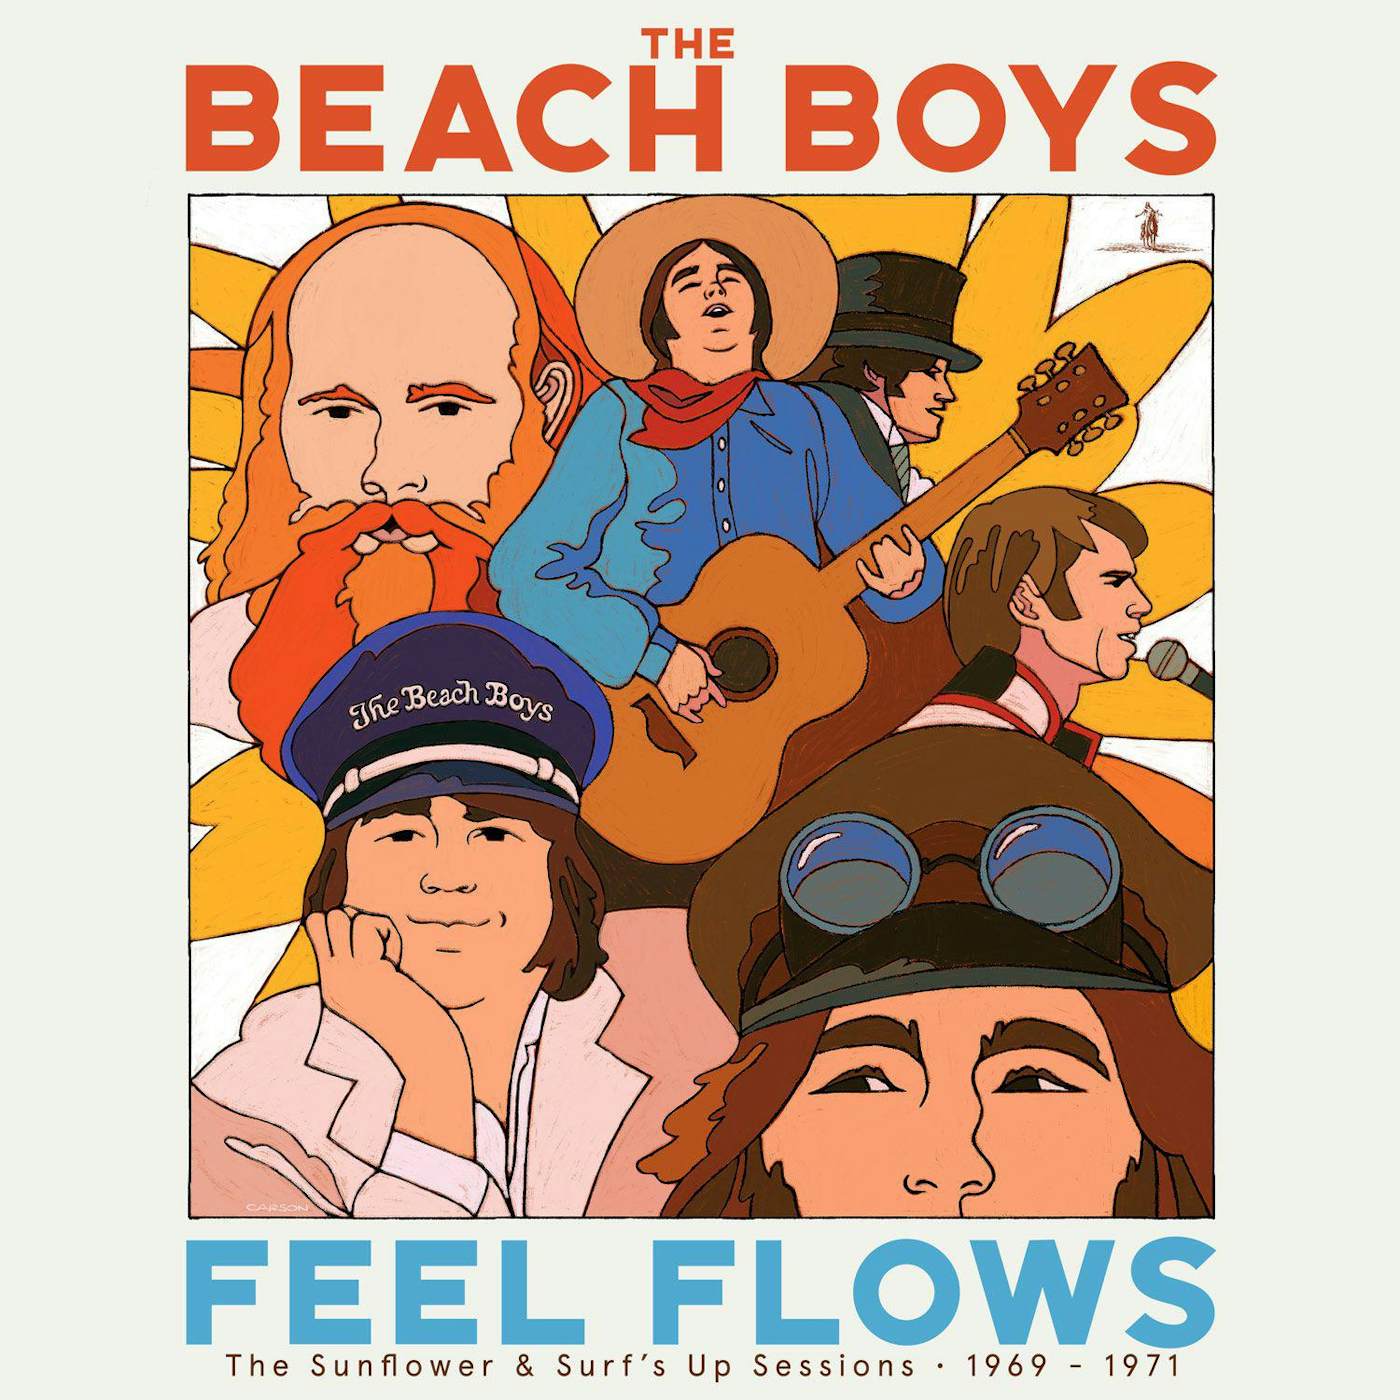 The Beach Boys "Feel Flows" The Sunflower & Surf's Up Sessions 1969-1971 (5 CD Box Set)